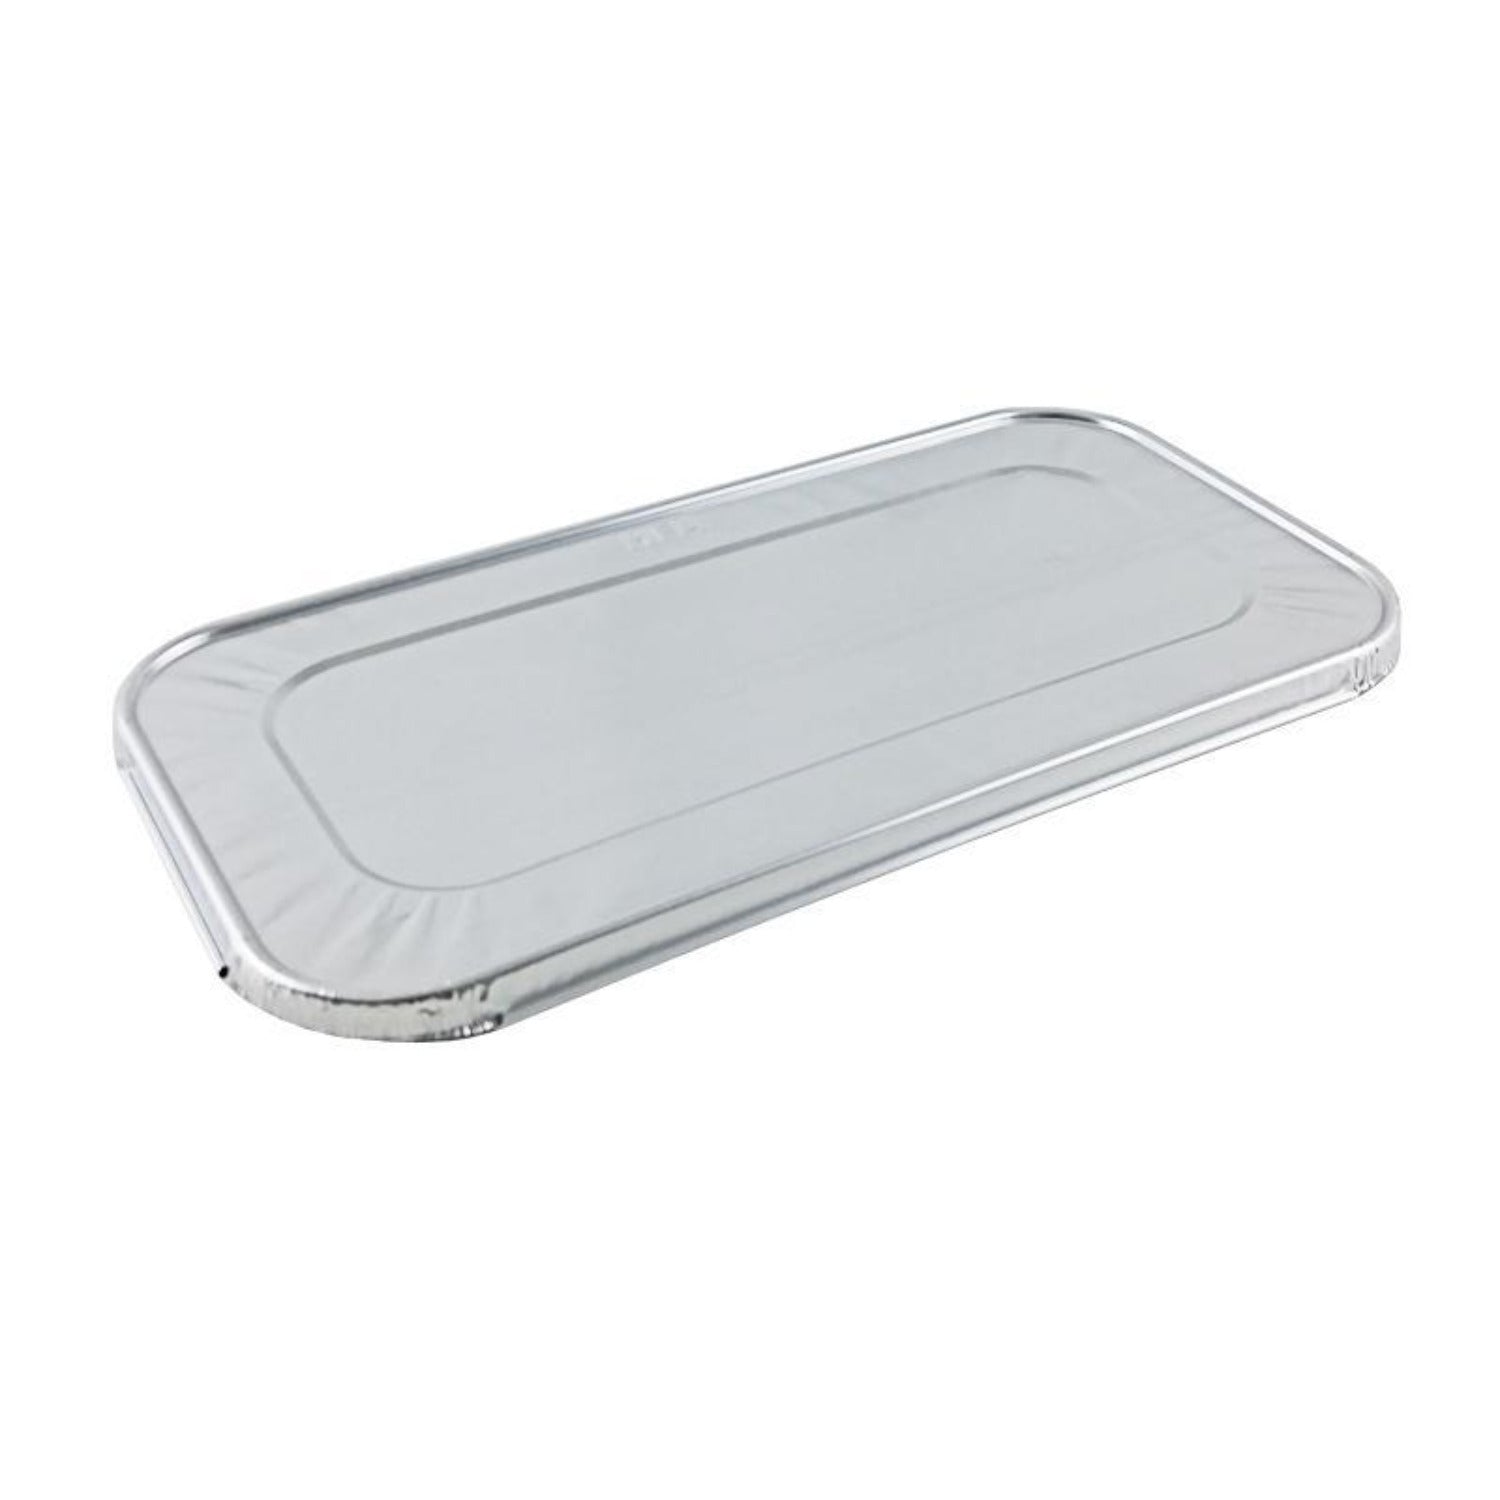 Disposable Aluminum Lid for 5 lb Loaf Baking Pan 12 11/16 L x 6 9/16 W x 1/2 H